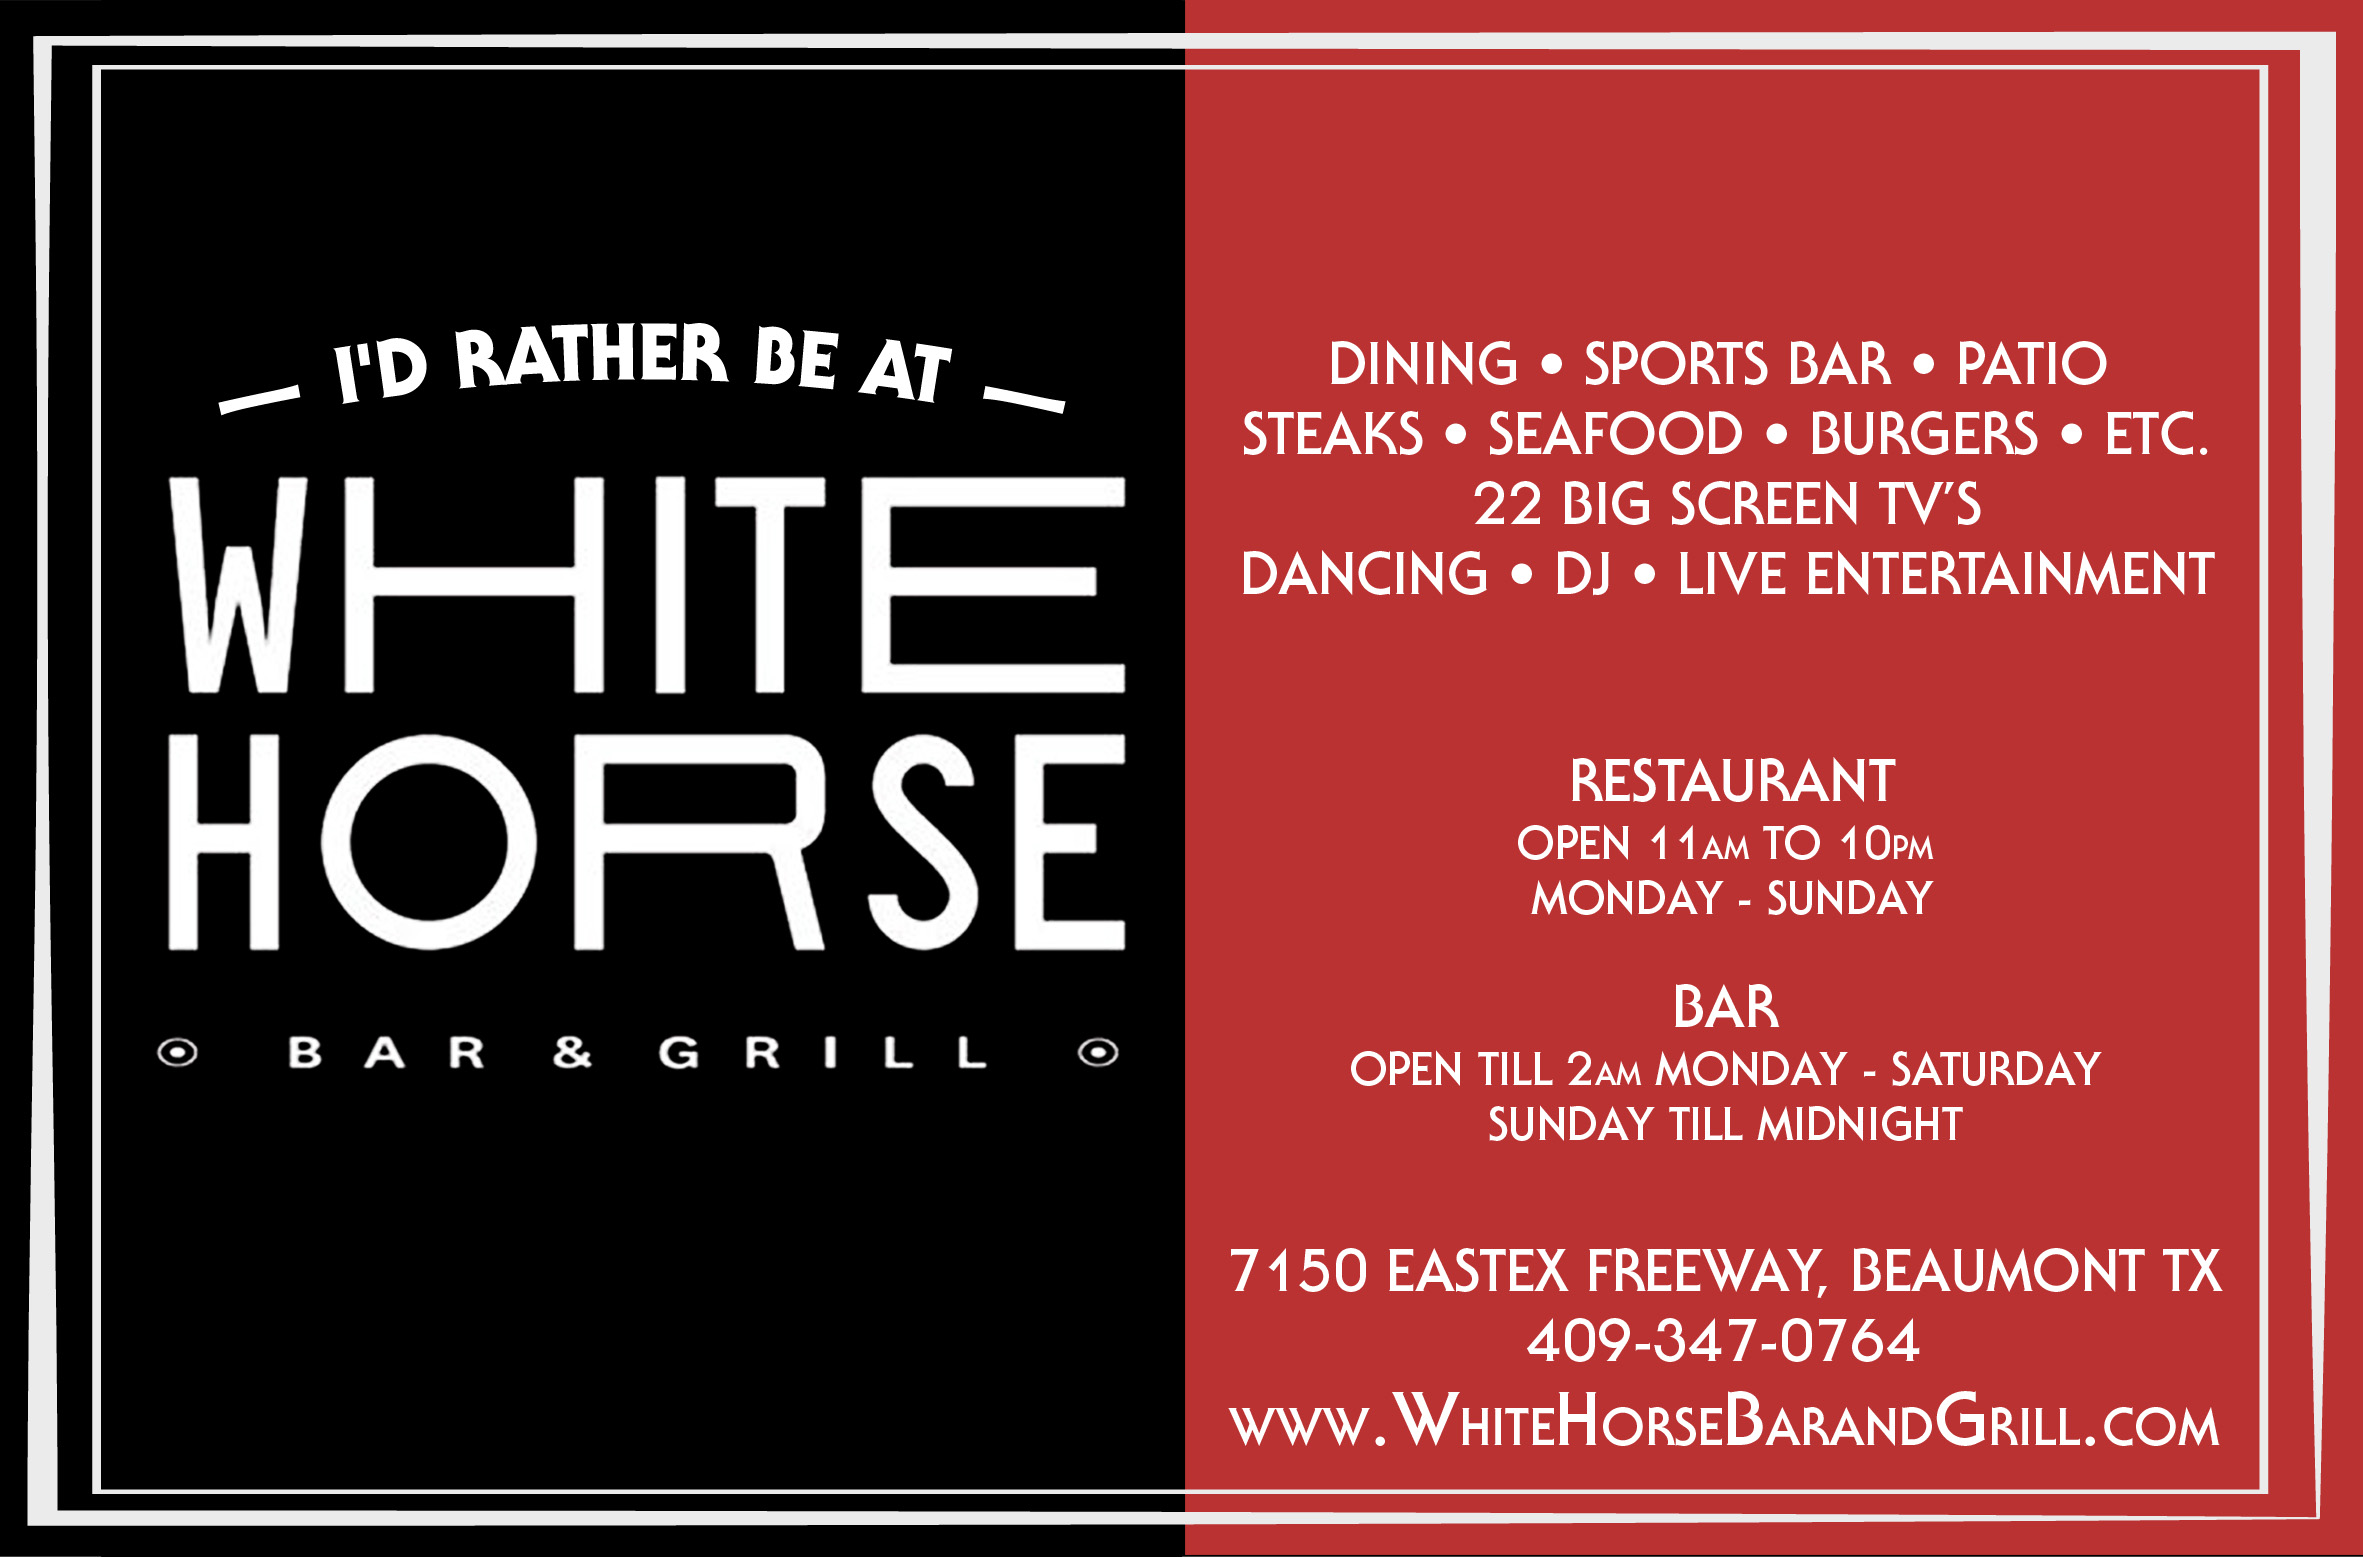 White Horse Bar & Grill Beaumont restaurants